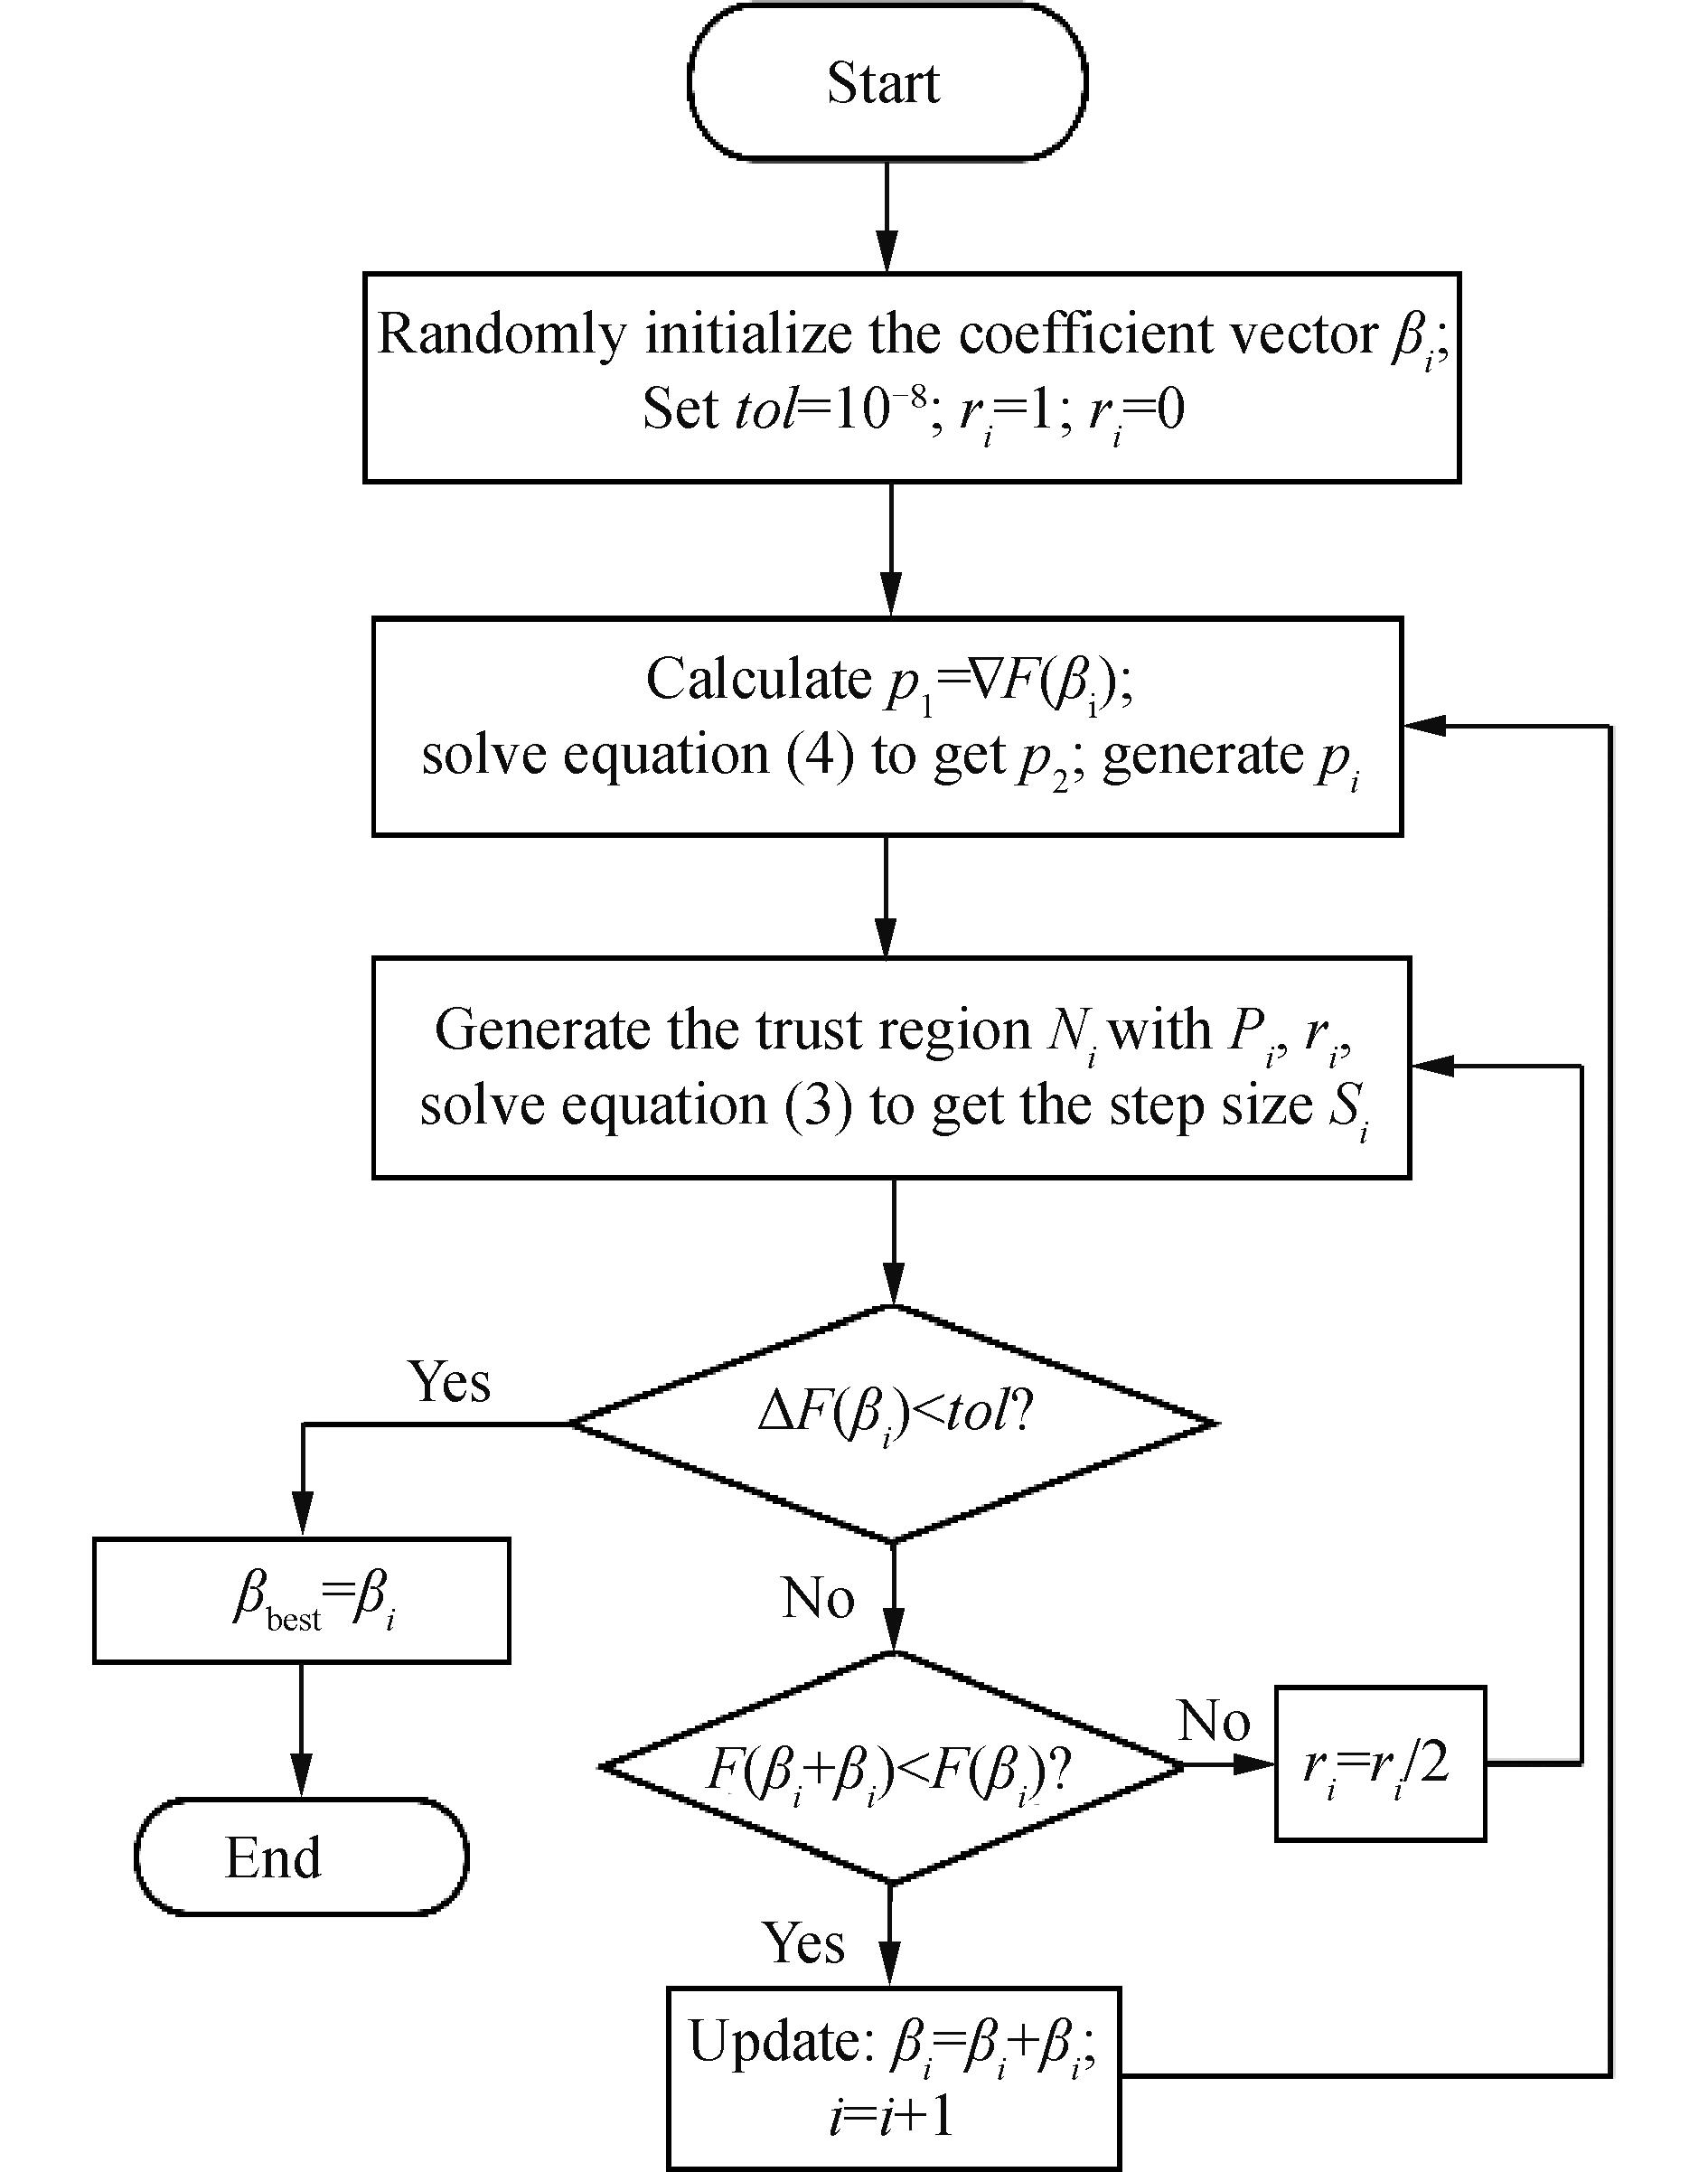 Flowchart for solving coefficient vector βbest by TRR algorithm